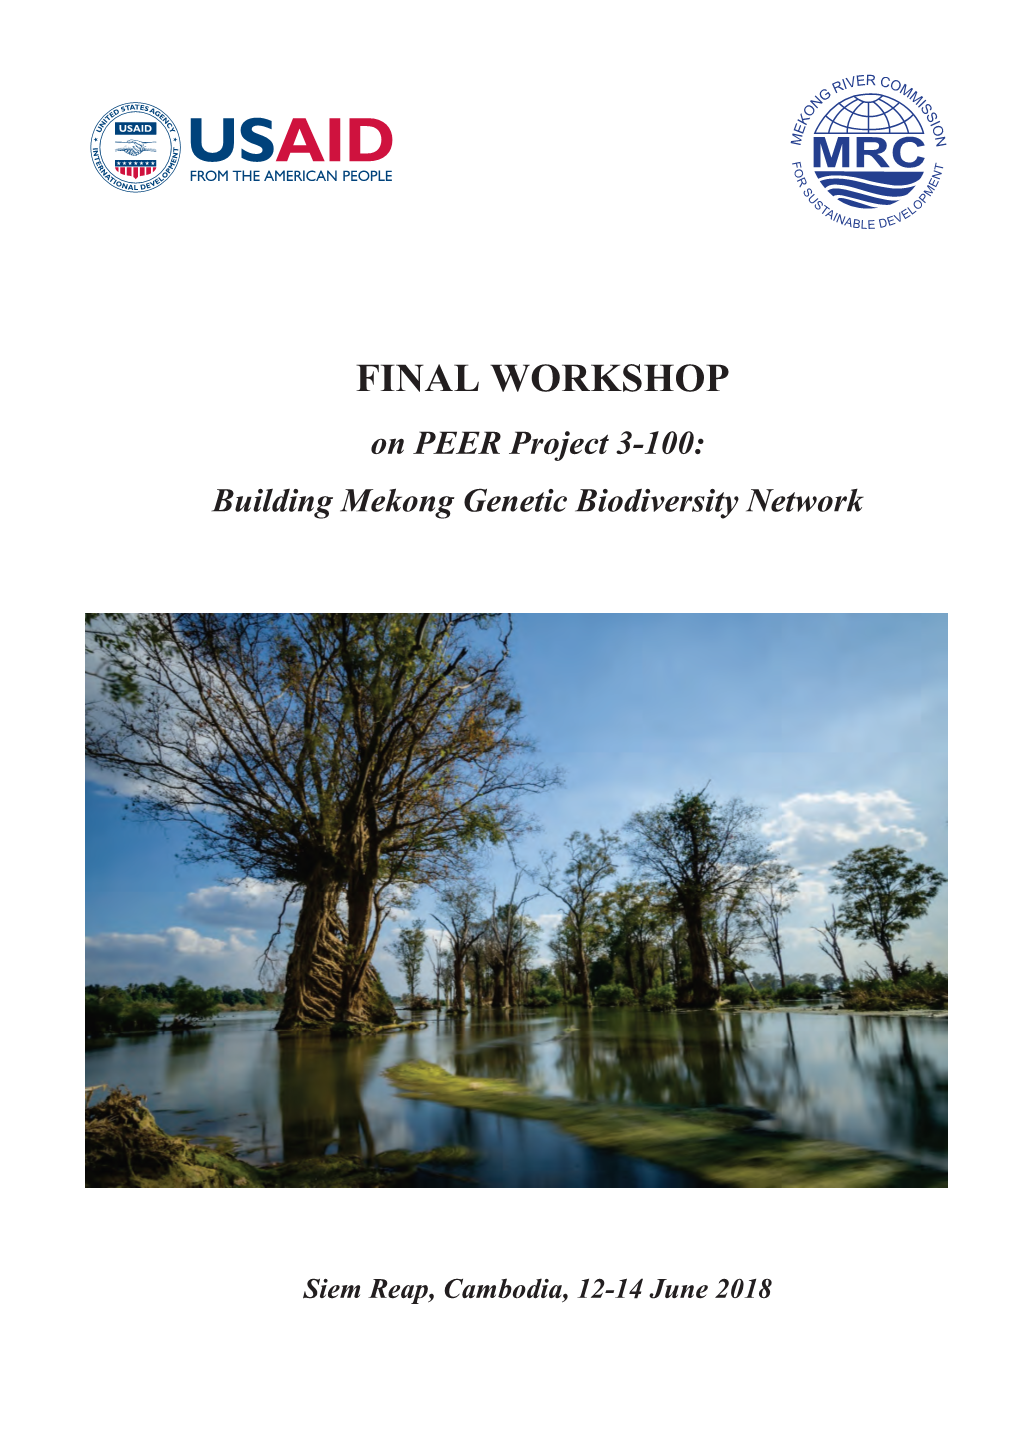 FINAL WORKSHOP on PEER Project 3-100: Building Mekong Genetic Biodiversity Network